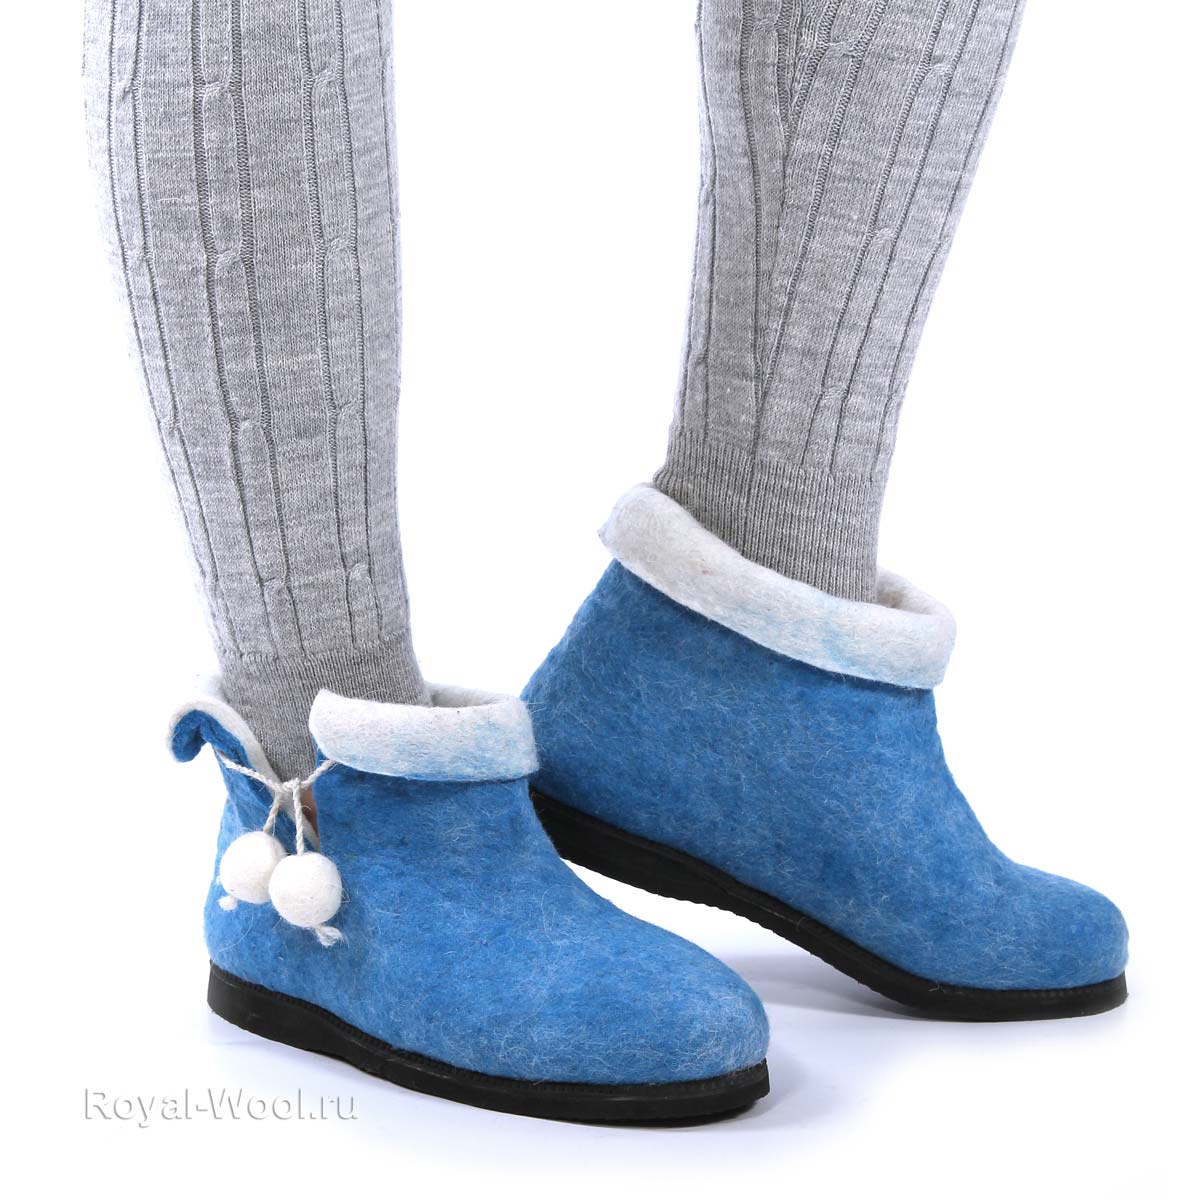 Домашние тапочки, носочки, валенки своими руками ( апсайклинг) - YouTube | Slippers